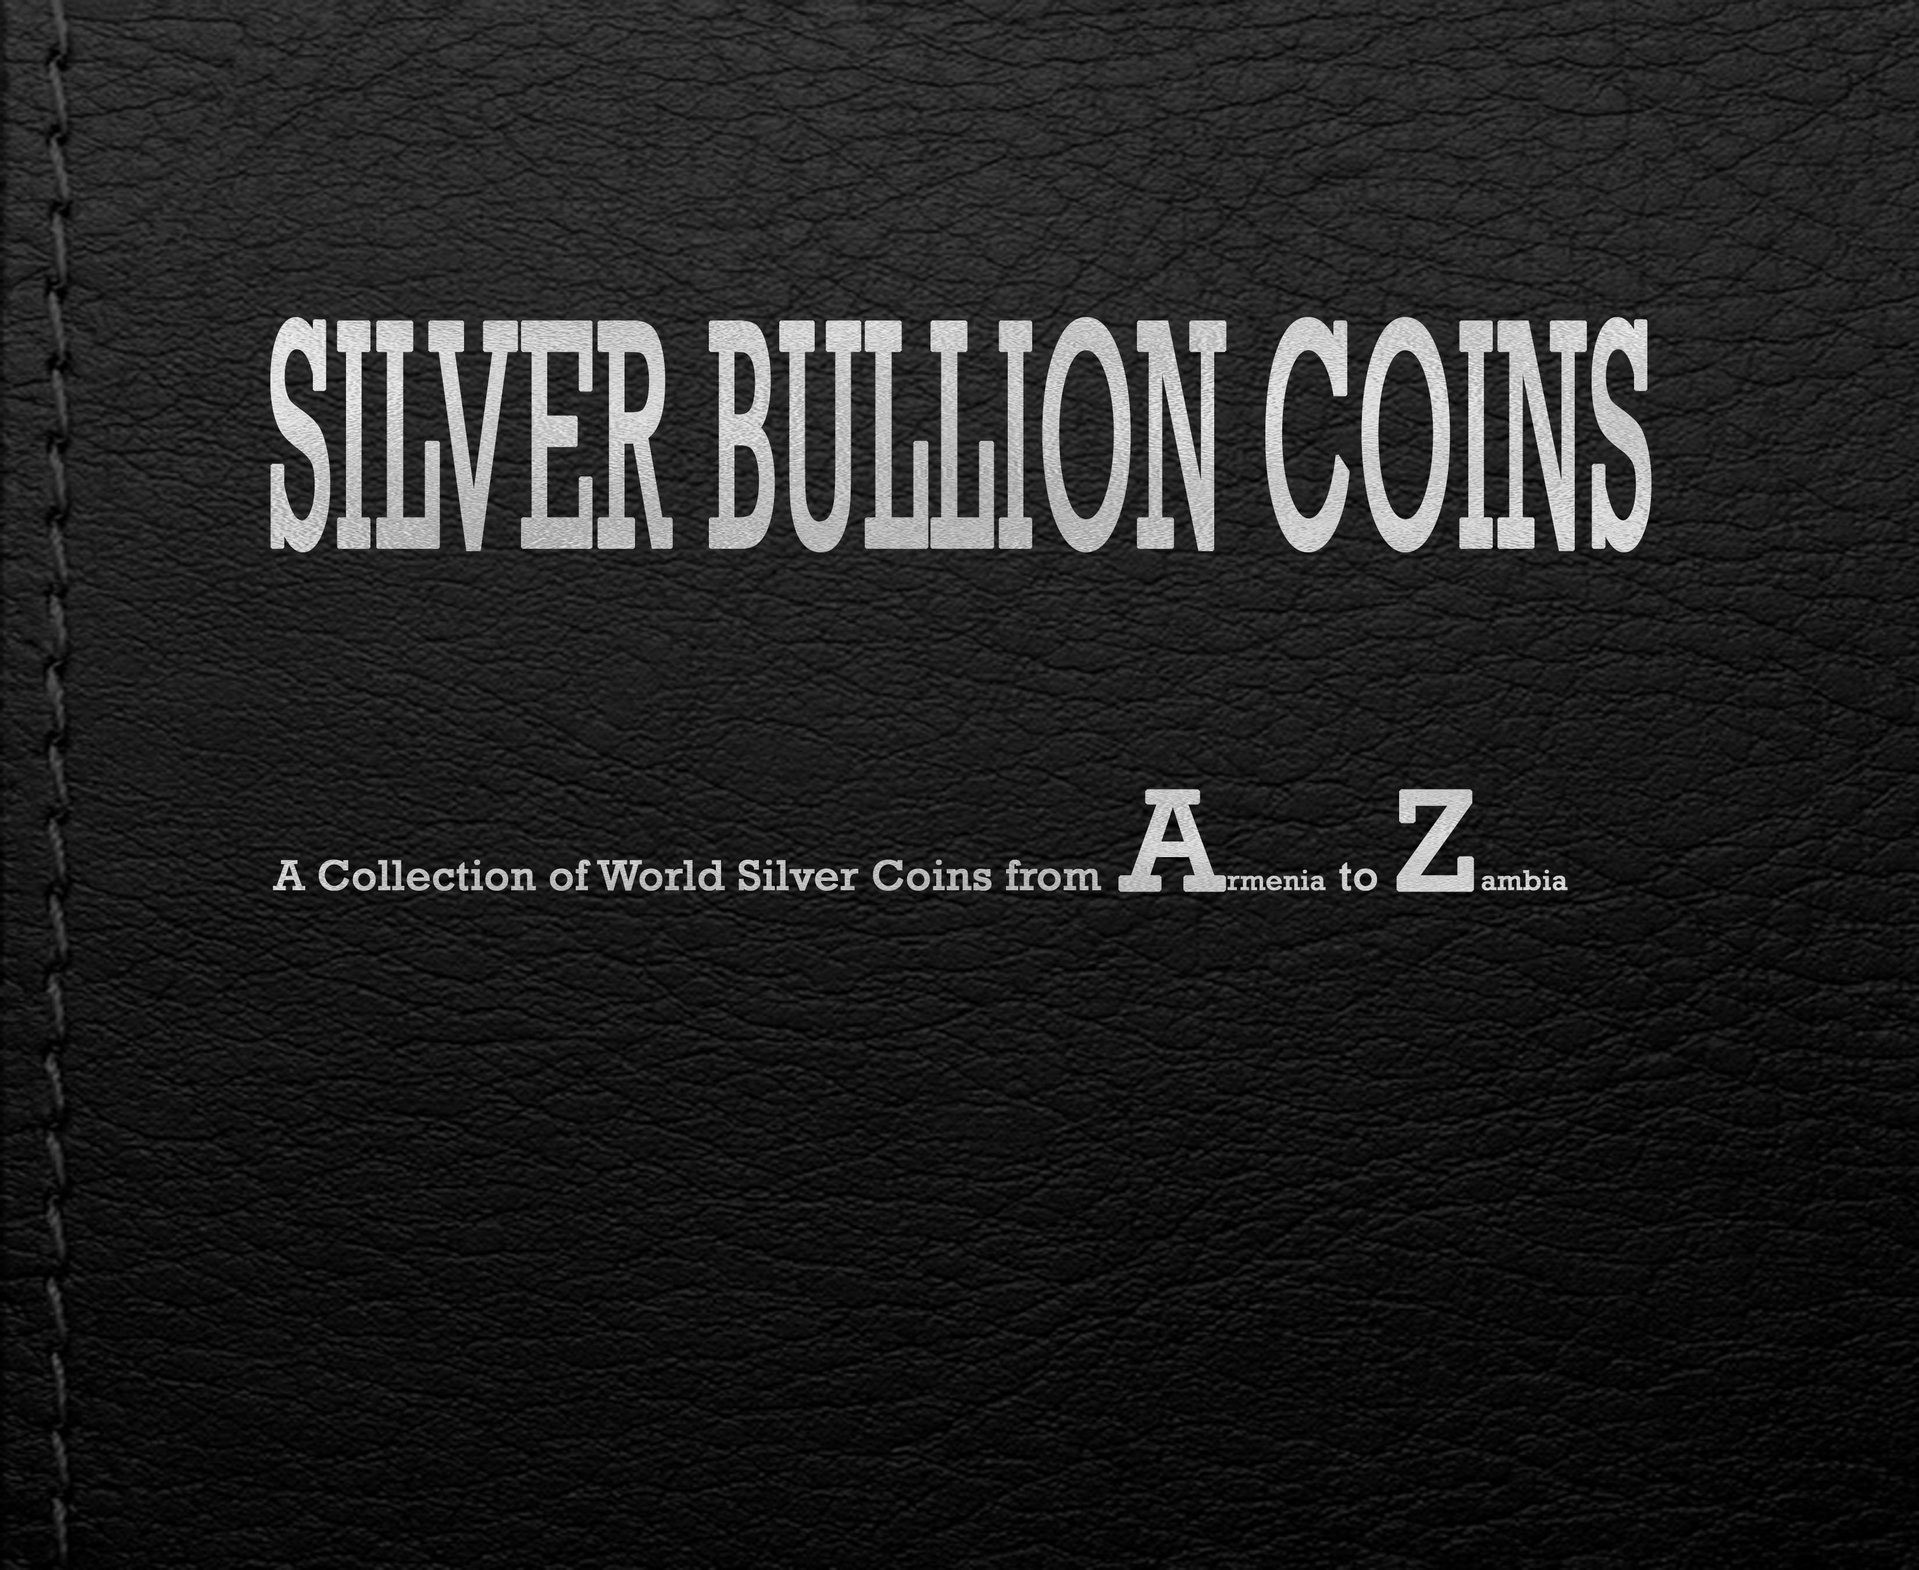 Silver Bullion Coins cover.jpg